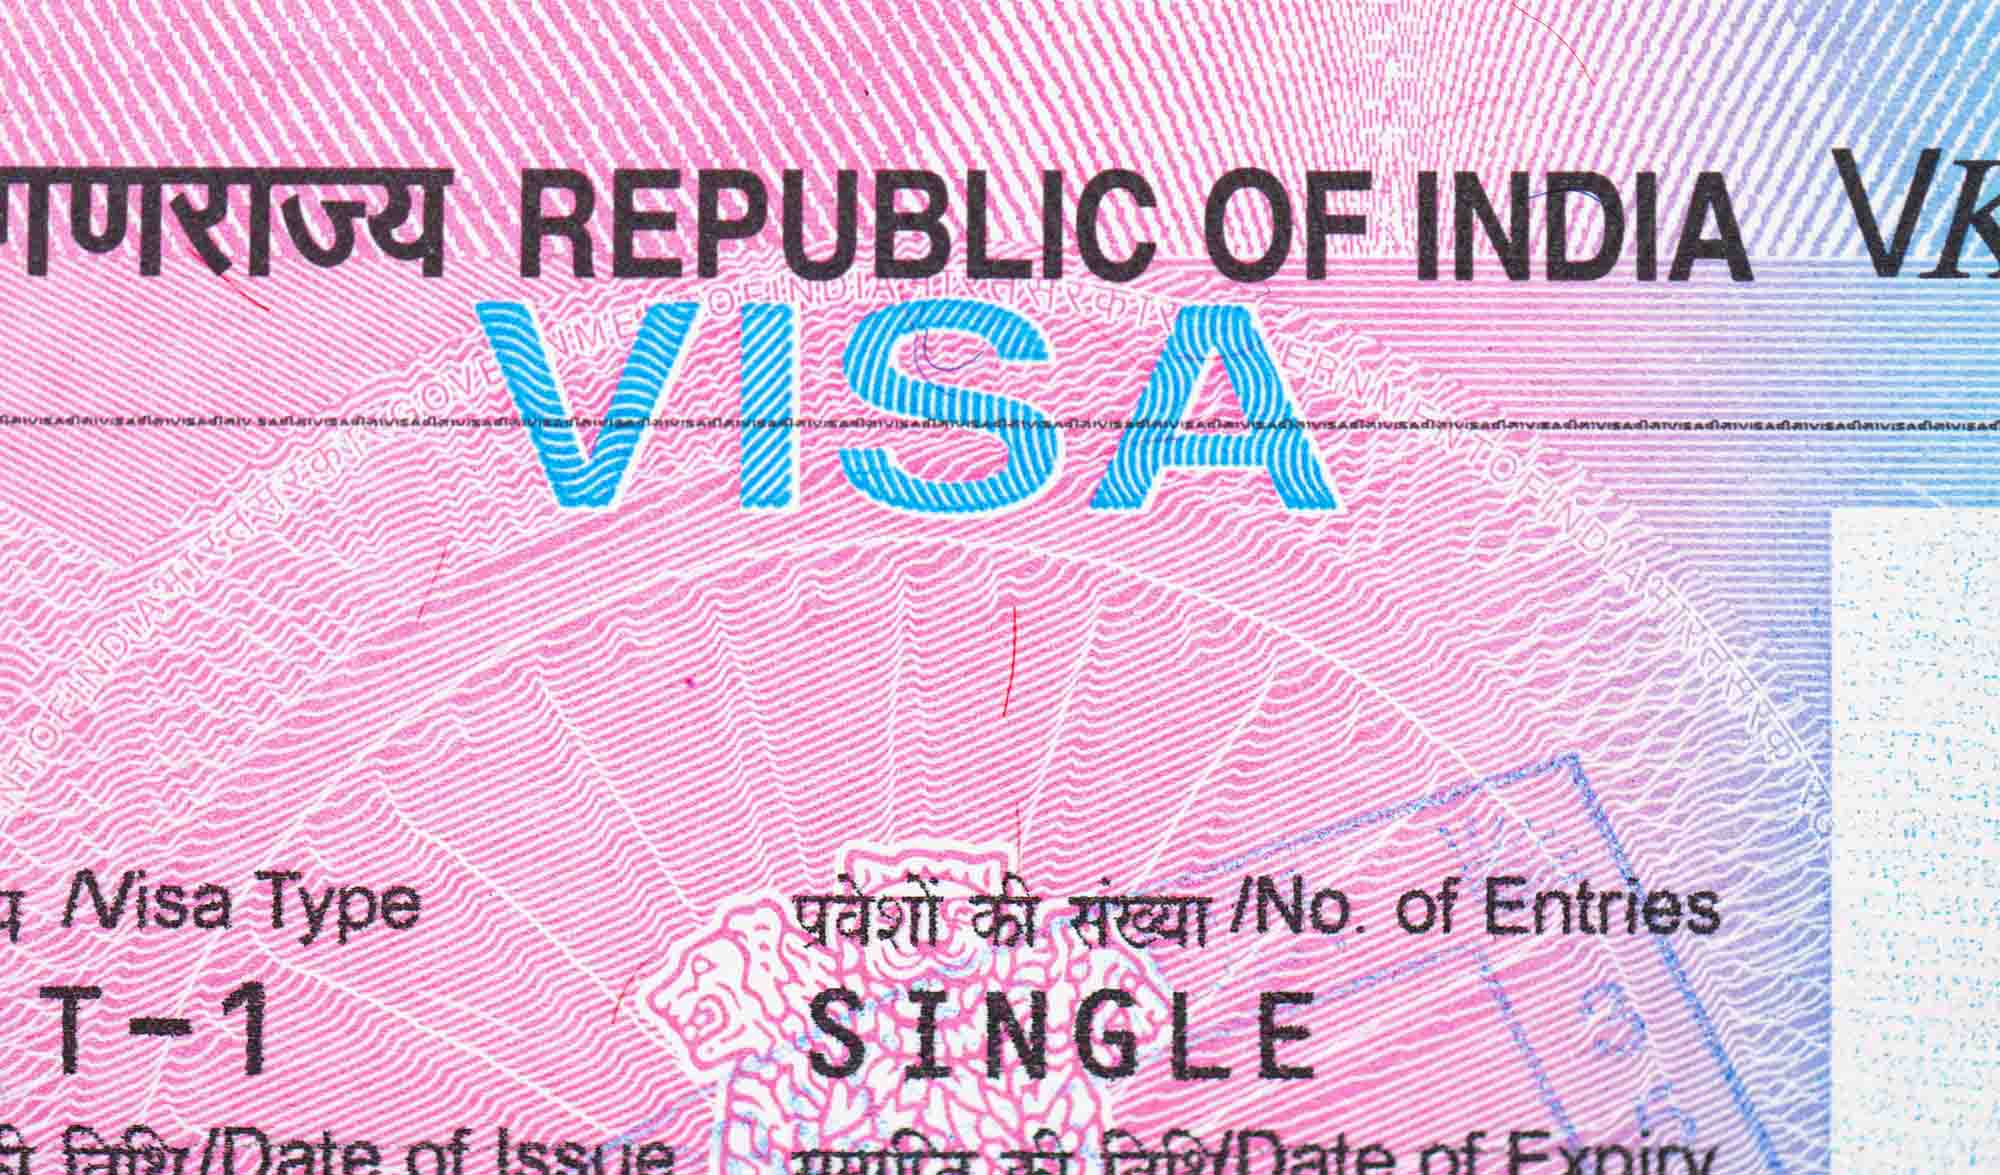 indian embassy e tourist visa